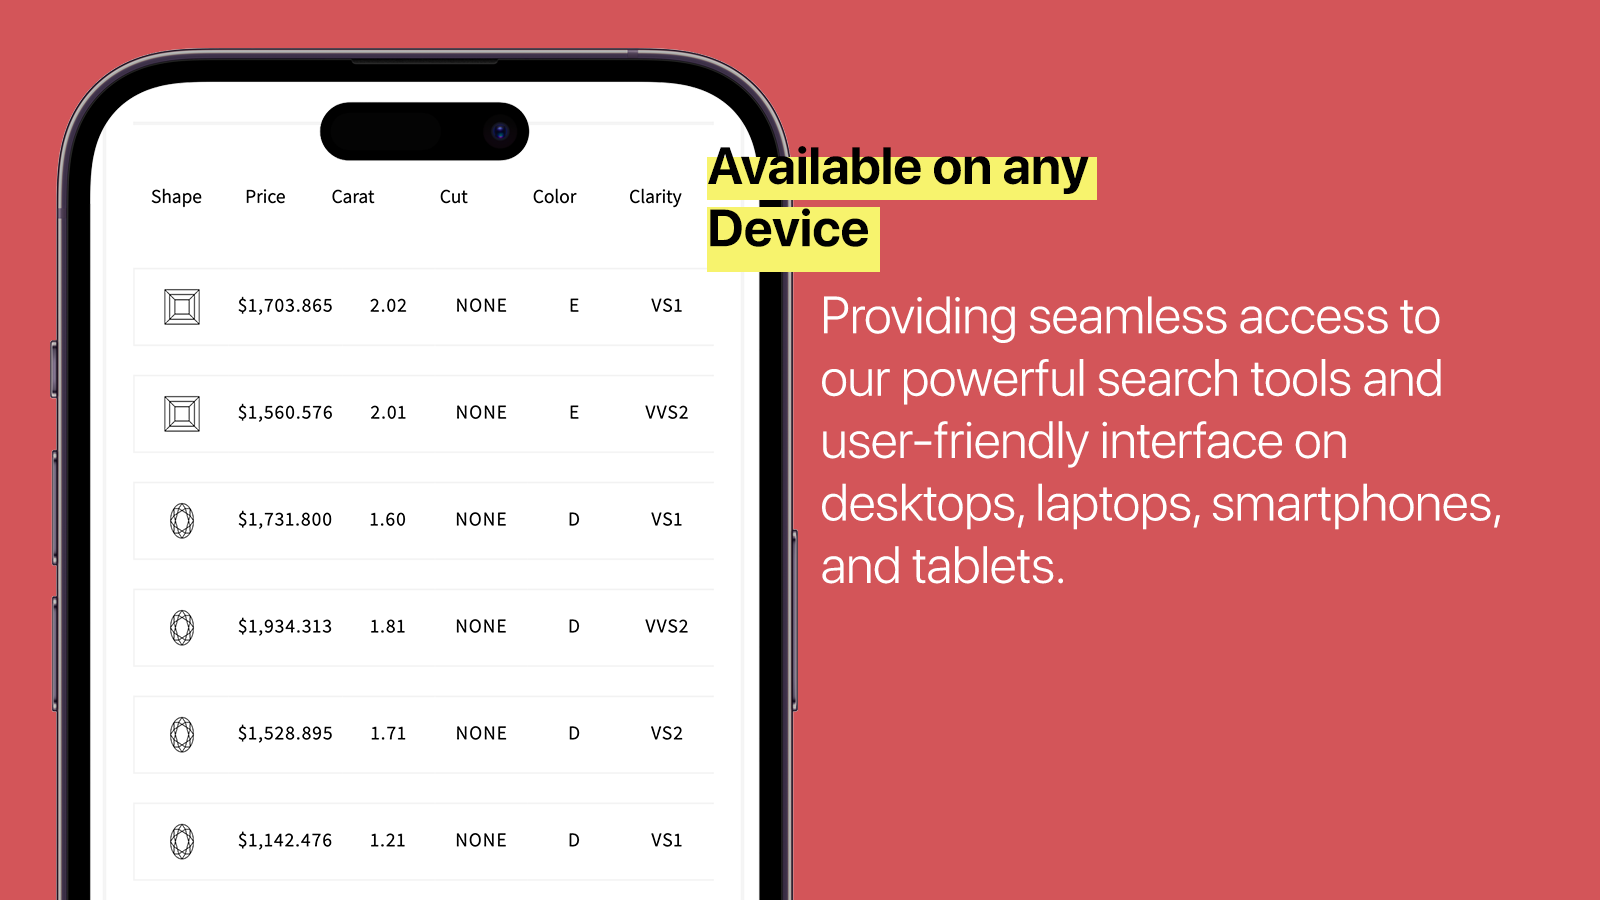 Available on any device, providing seamless access.